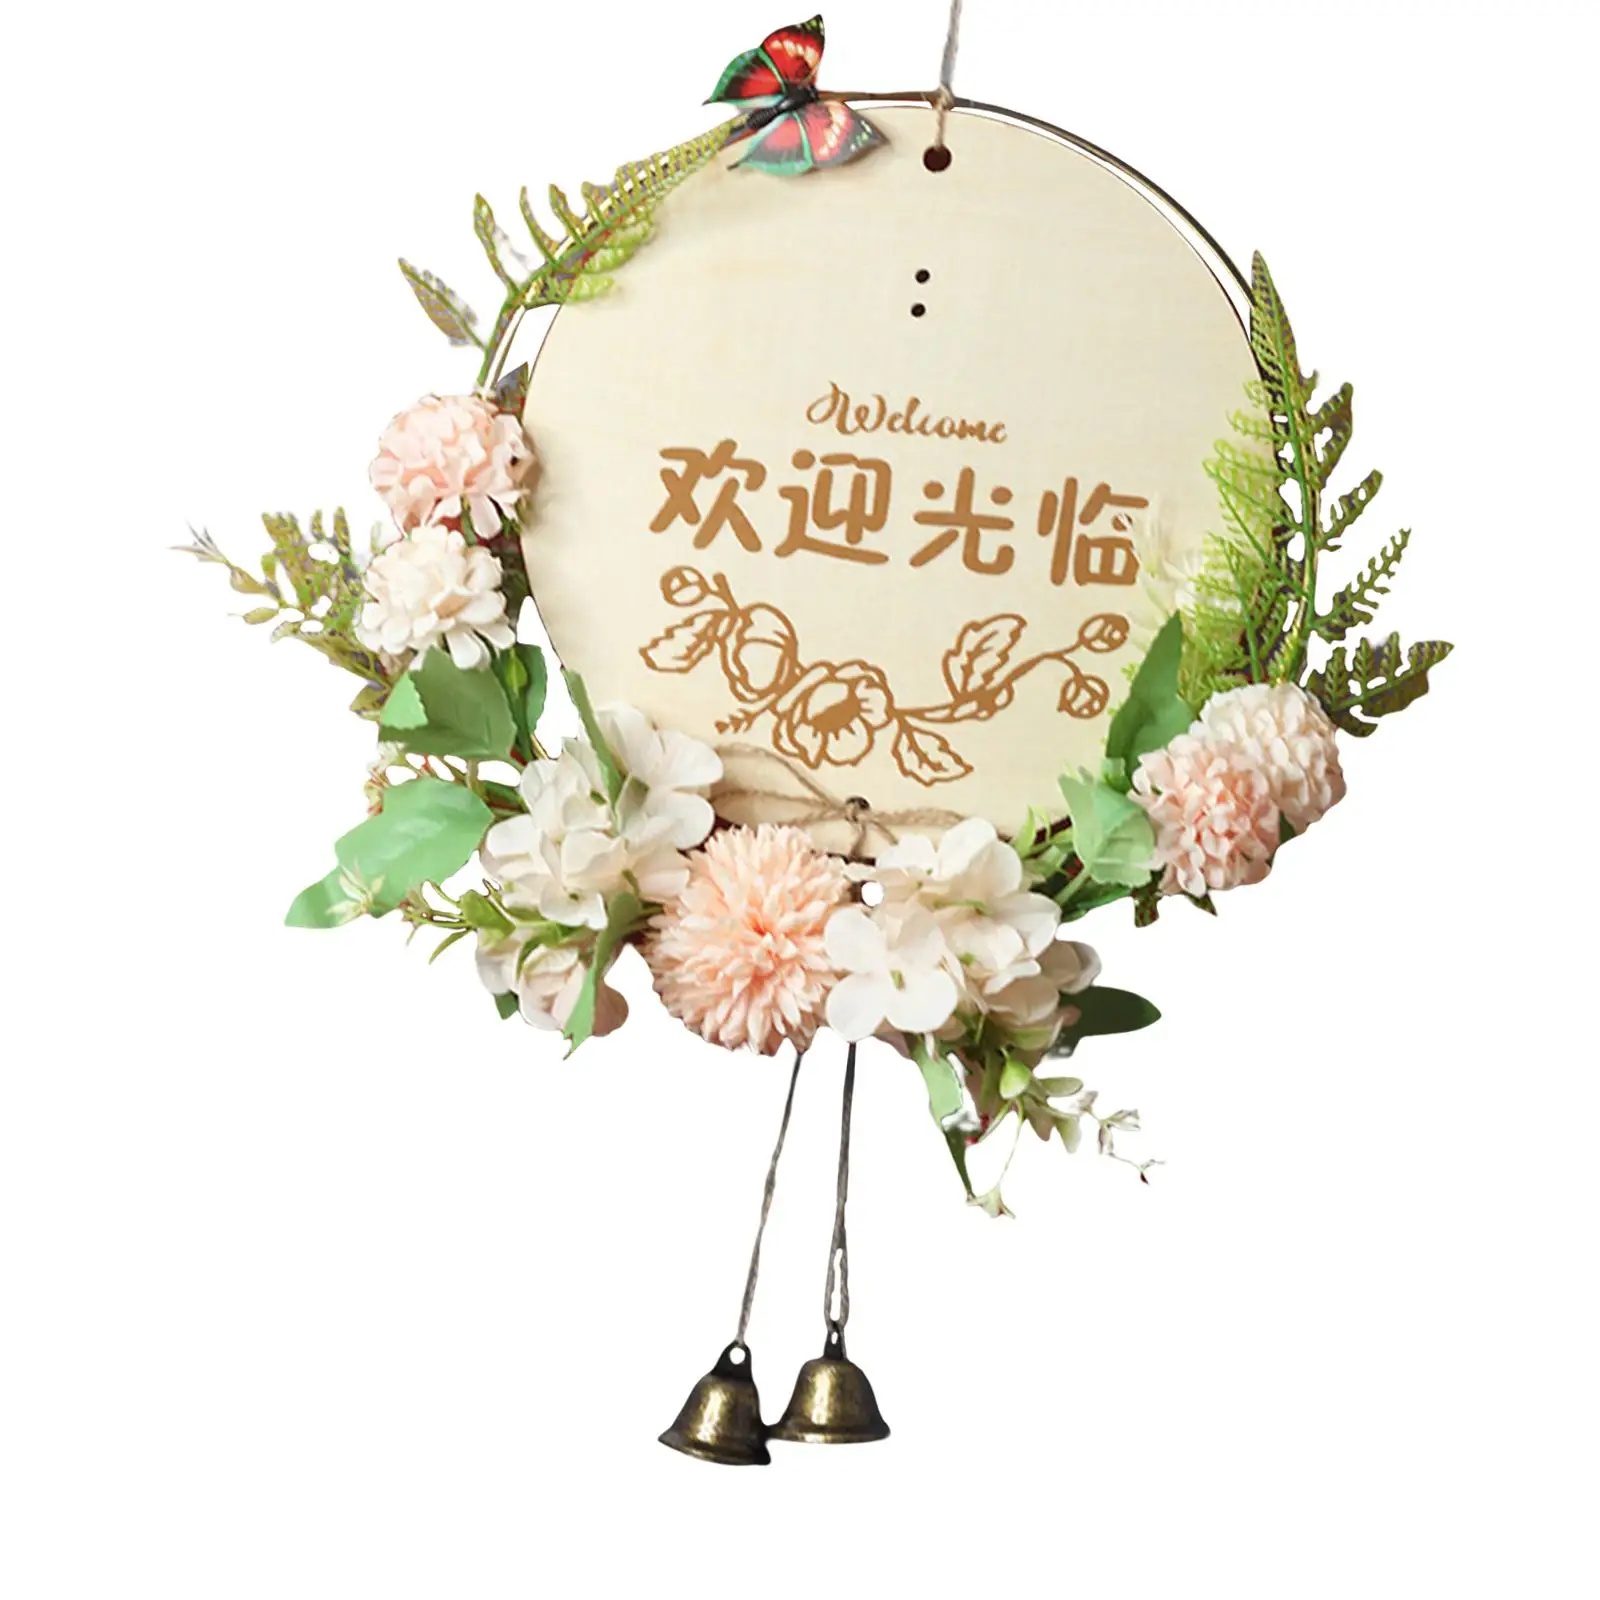 Welcome Sign Wreath with Bells Artificial Flower Door Wreath for Fireplace